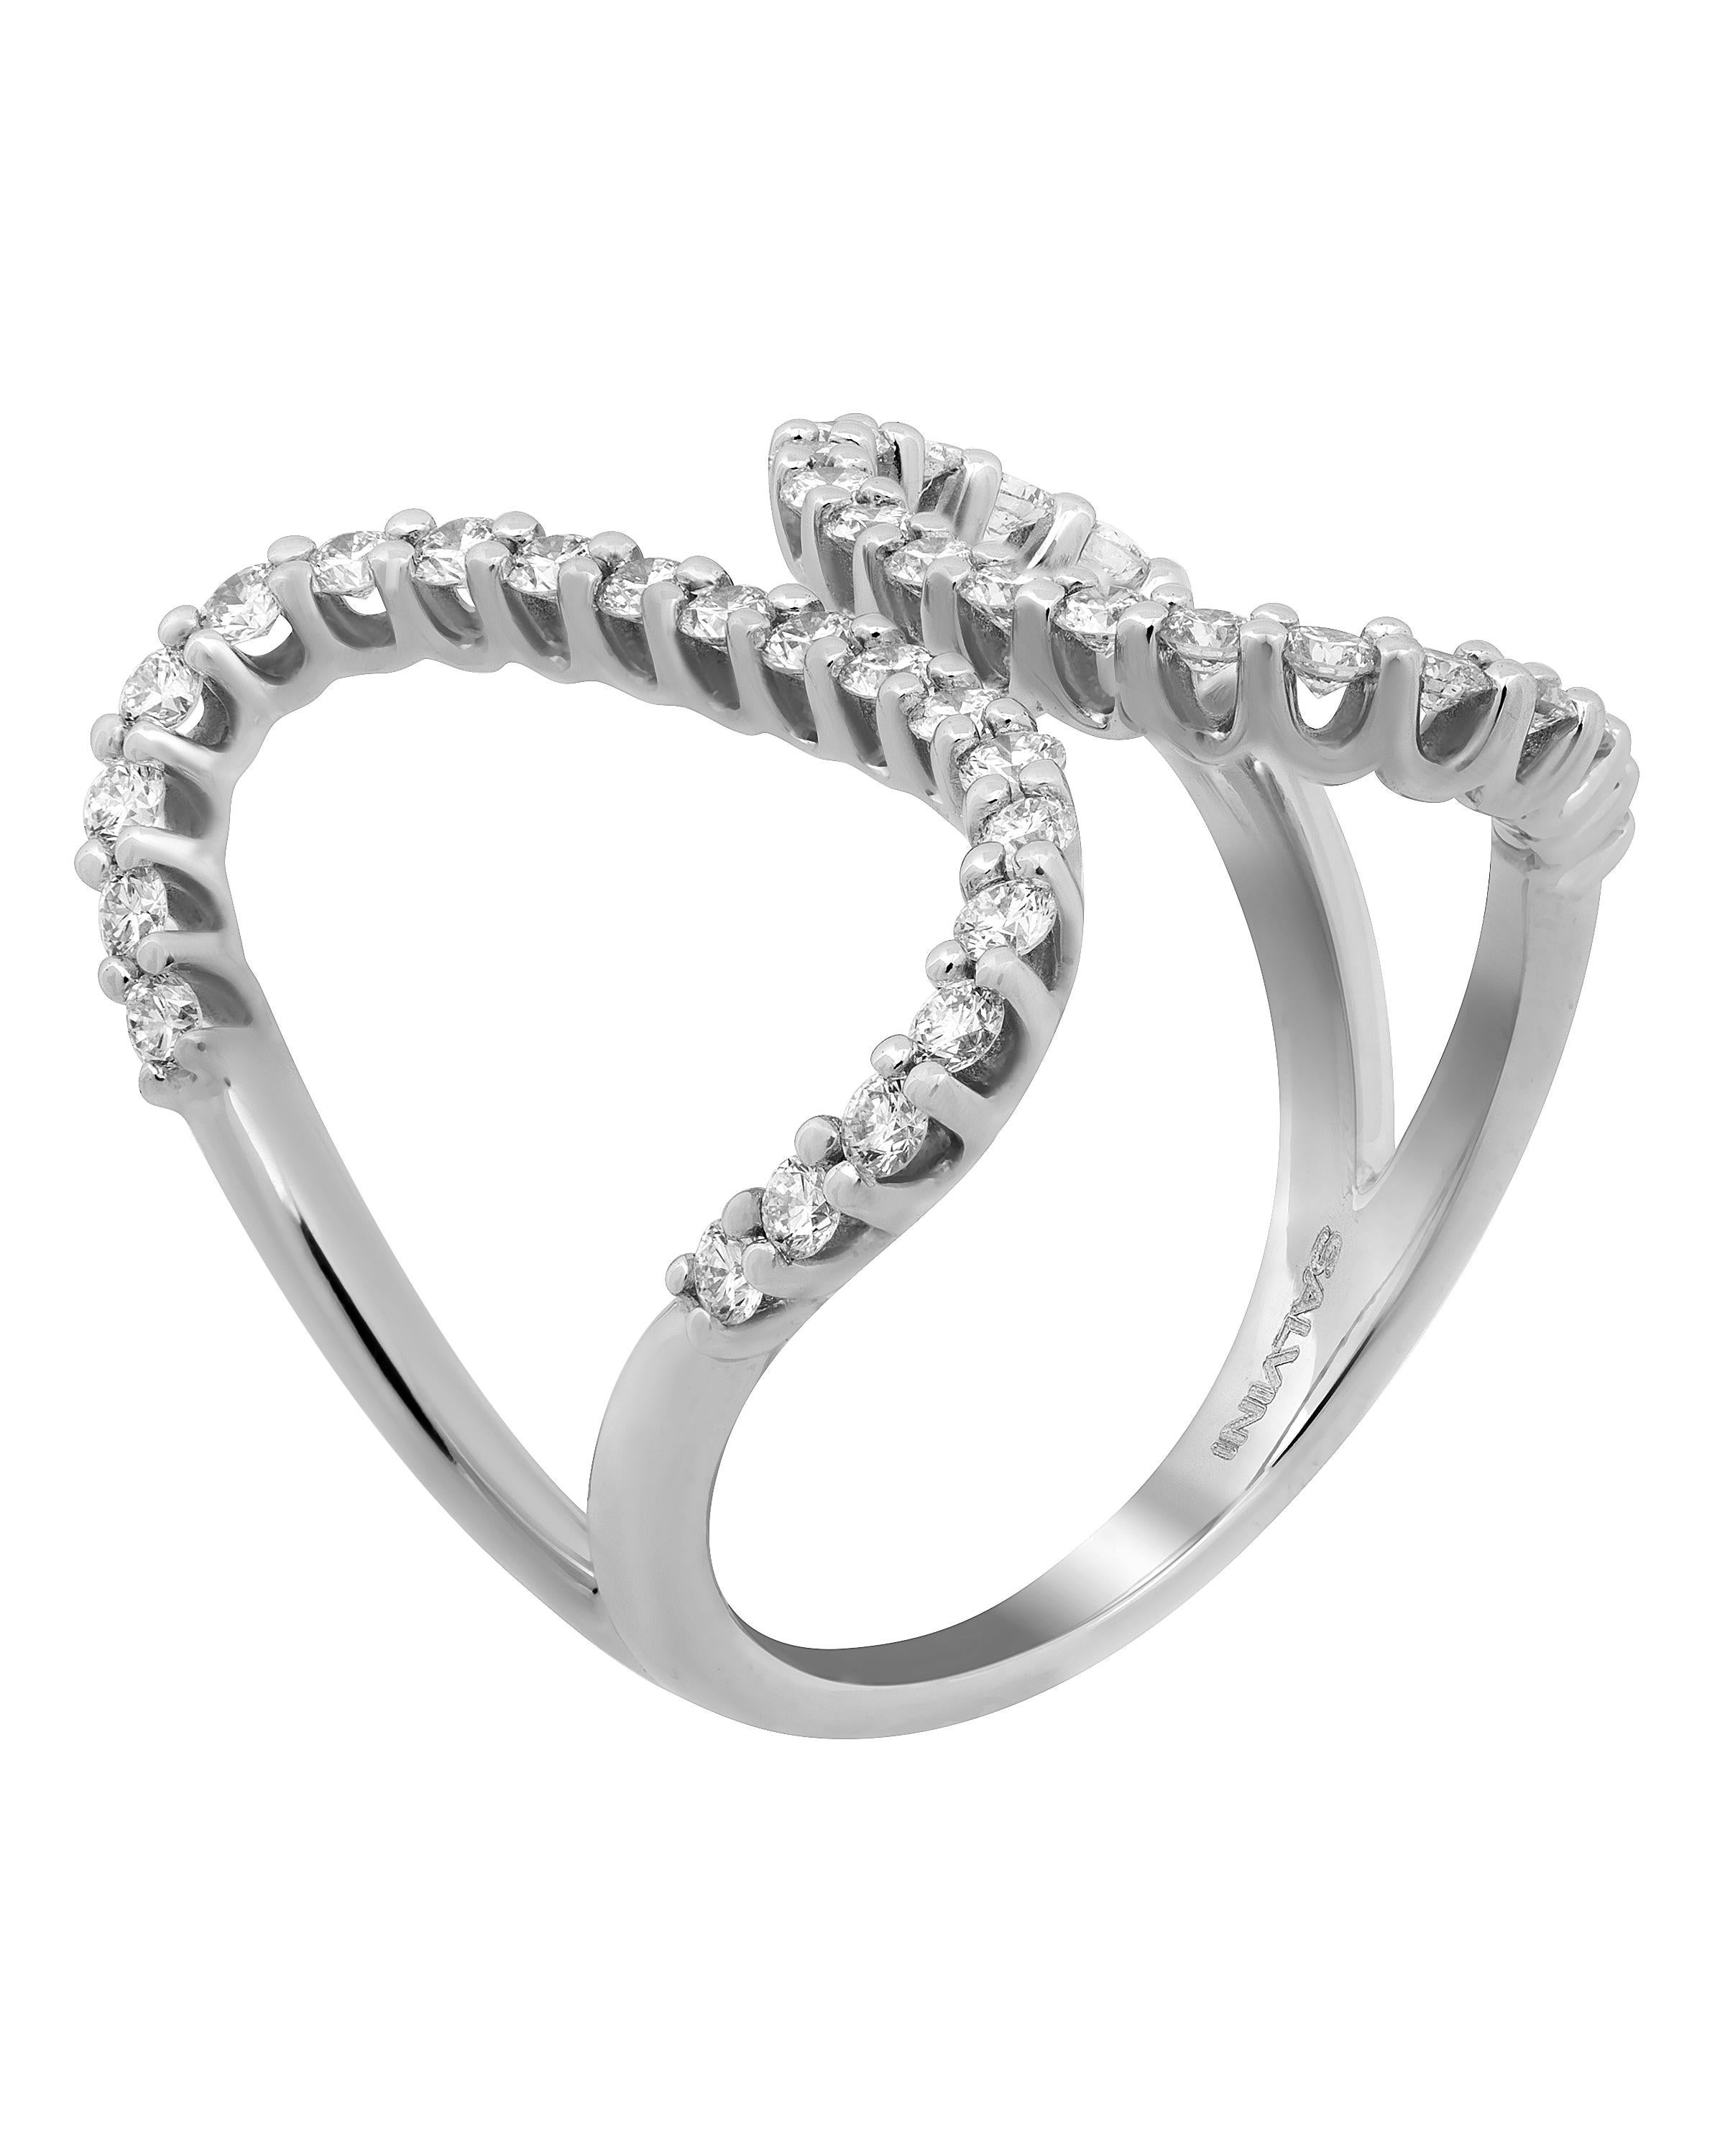 Contemporary SALVINI 18K White Gold, Diamond Wrap Ring sz 6 For Sale